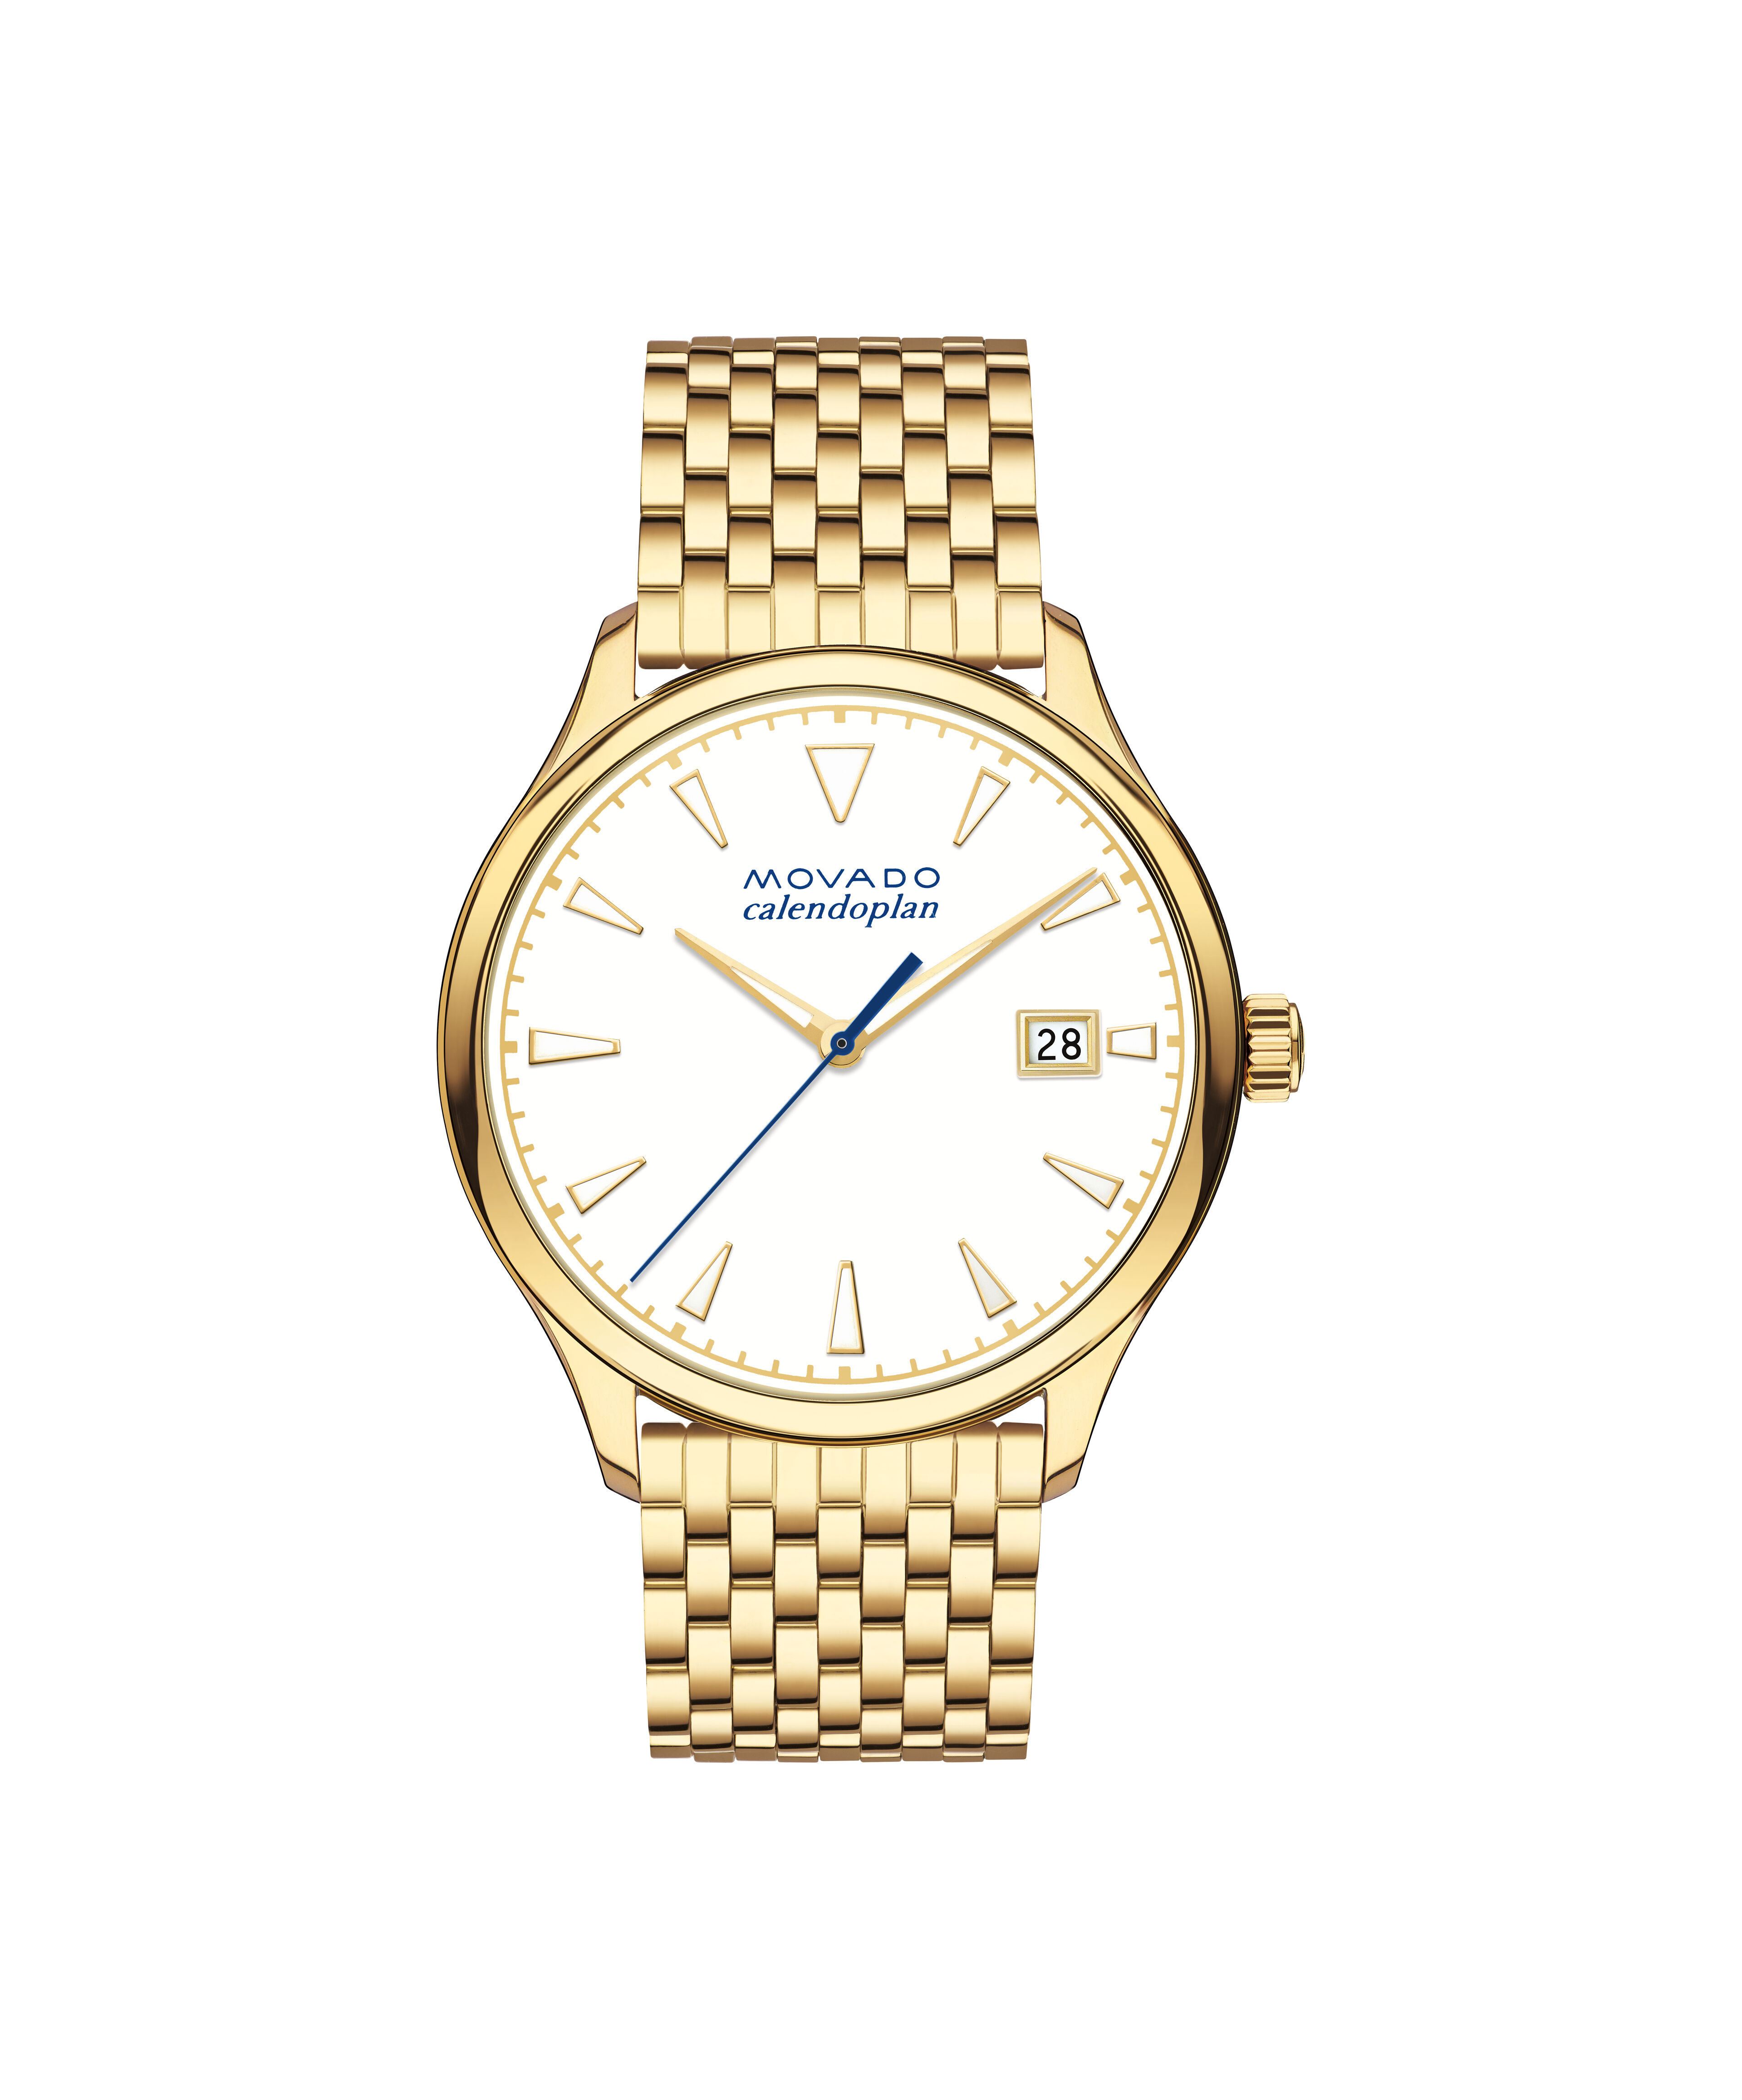 Replica Cartier Watches Usa